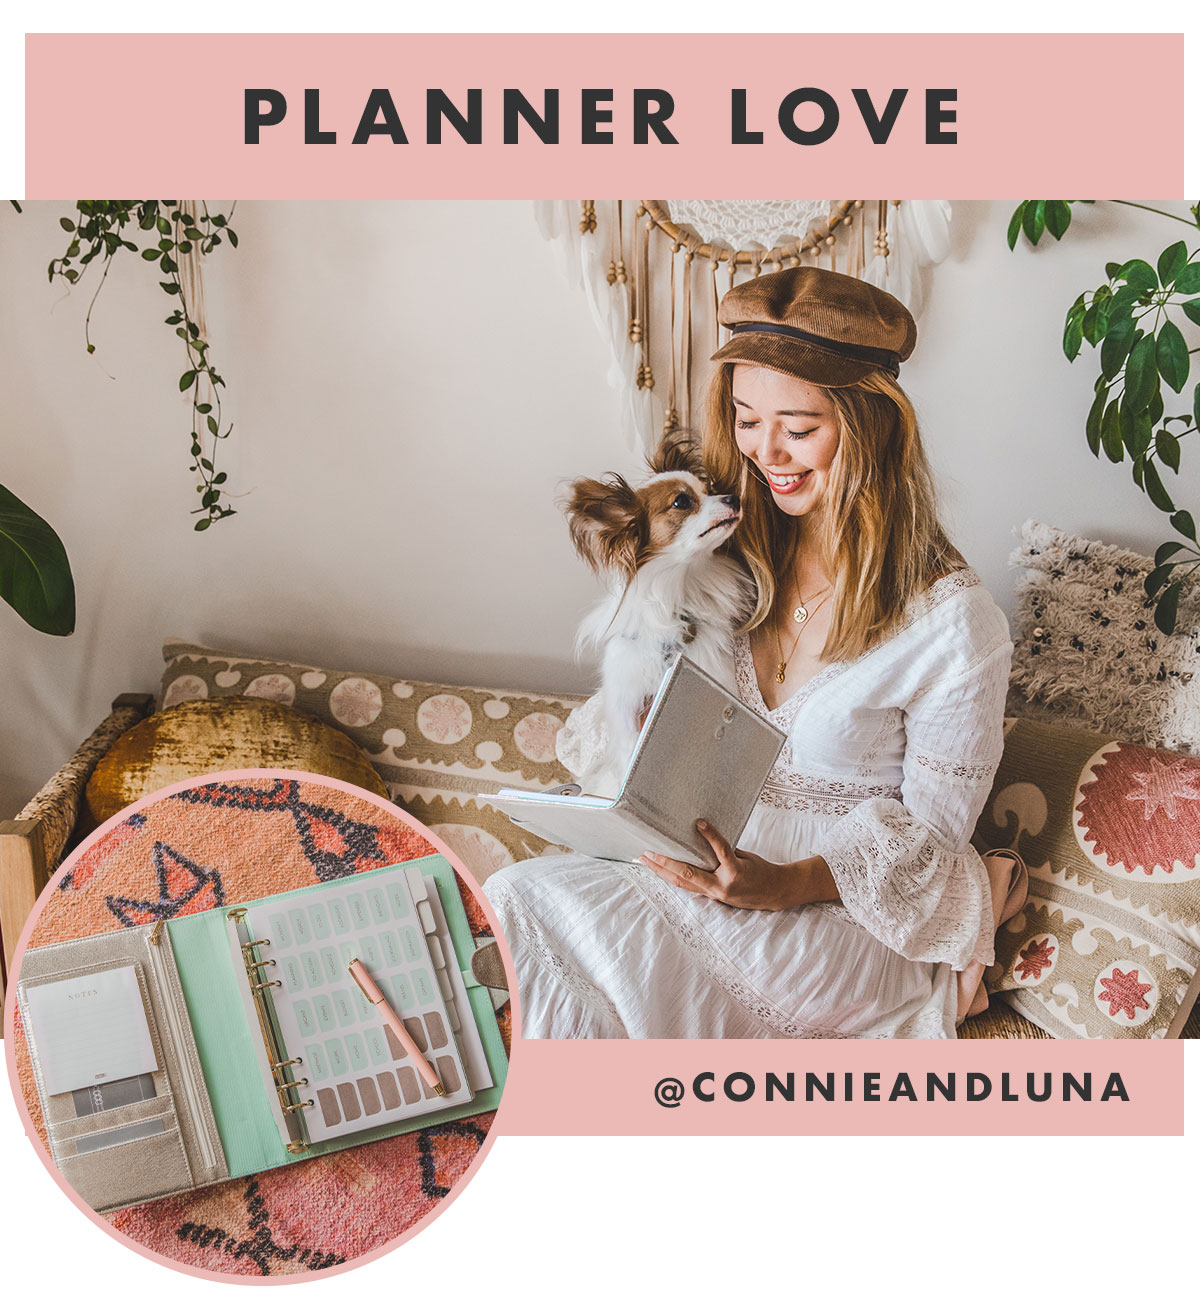 Planner love @connieandluna. 